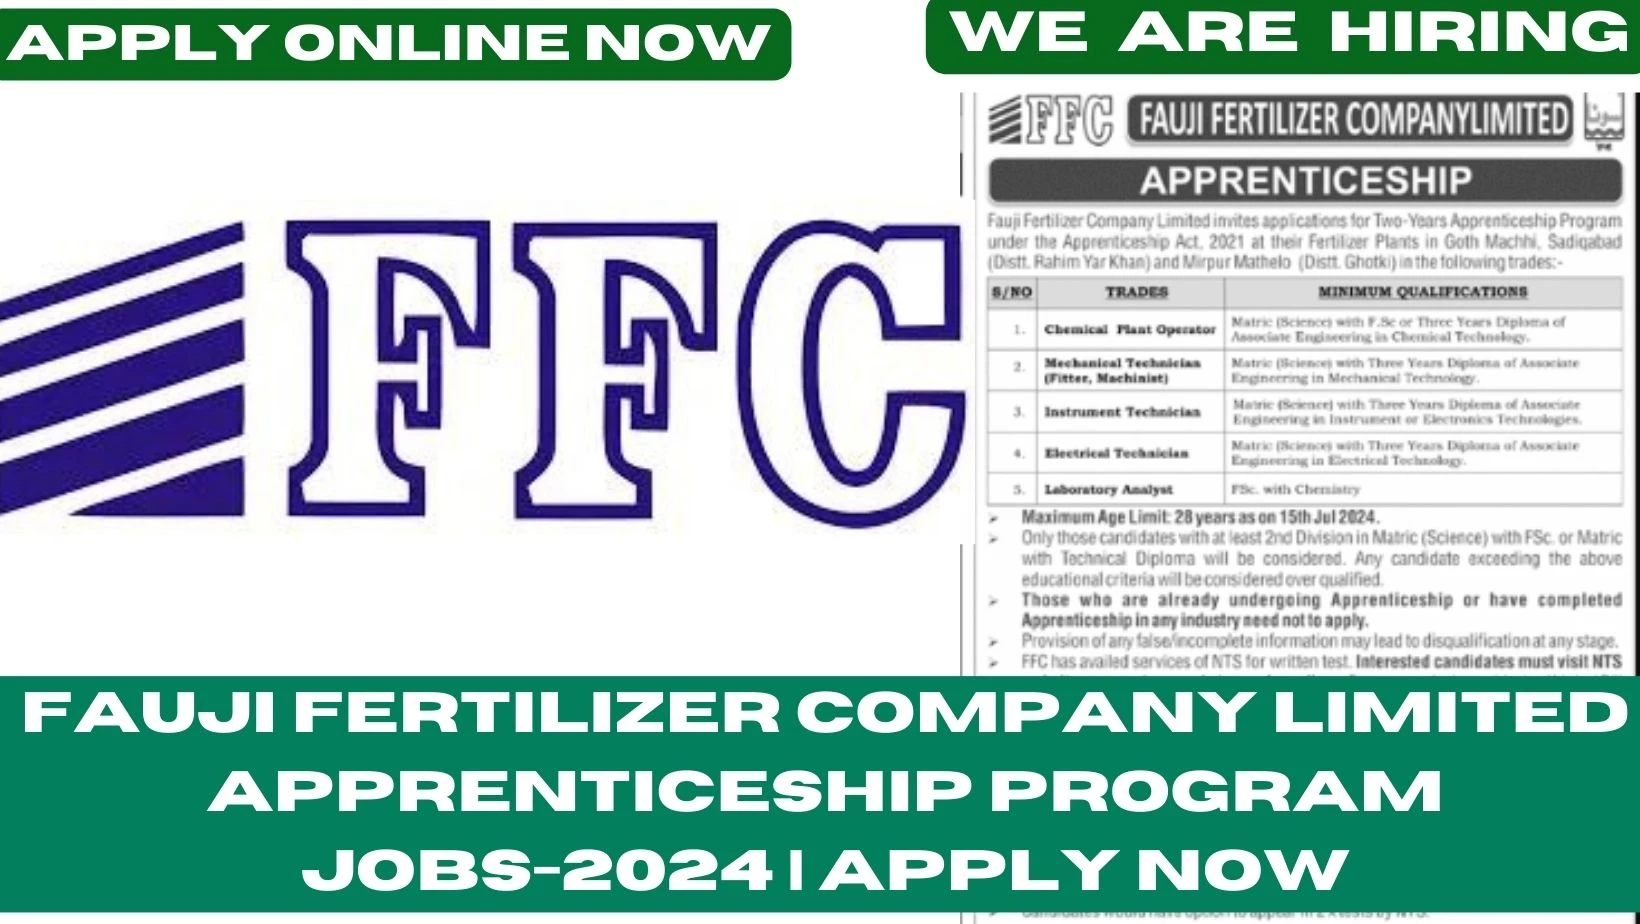 Fauji-Fertilizer-Company-Limited